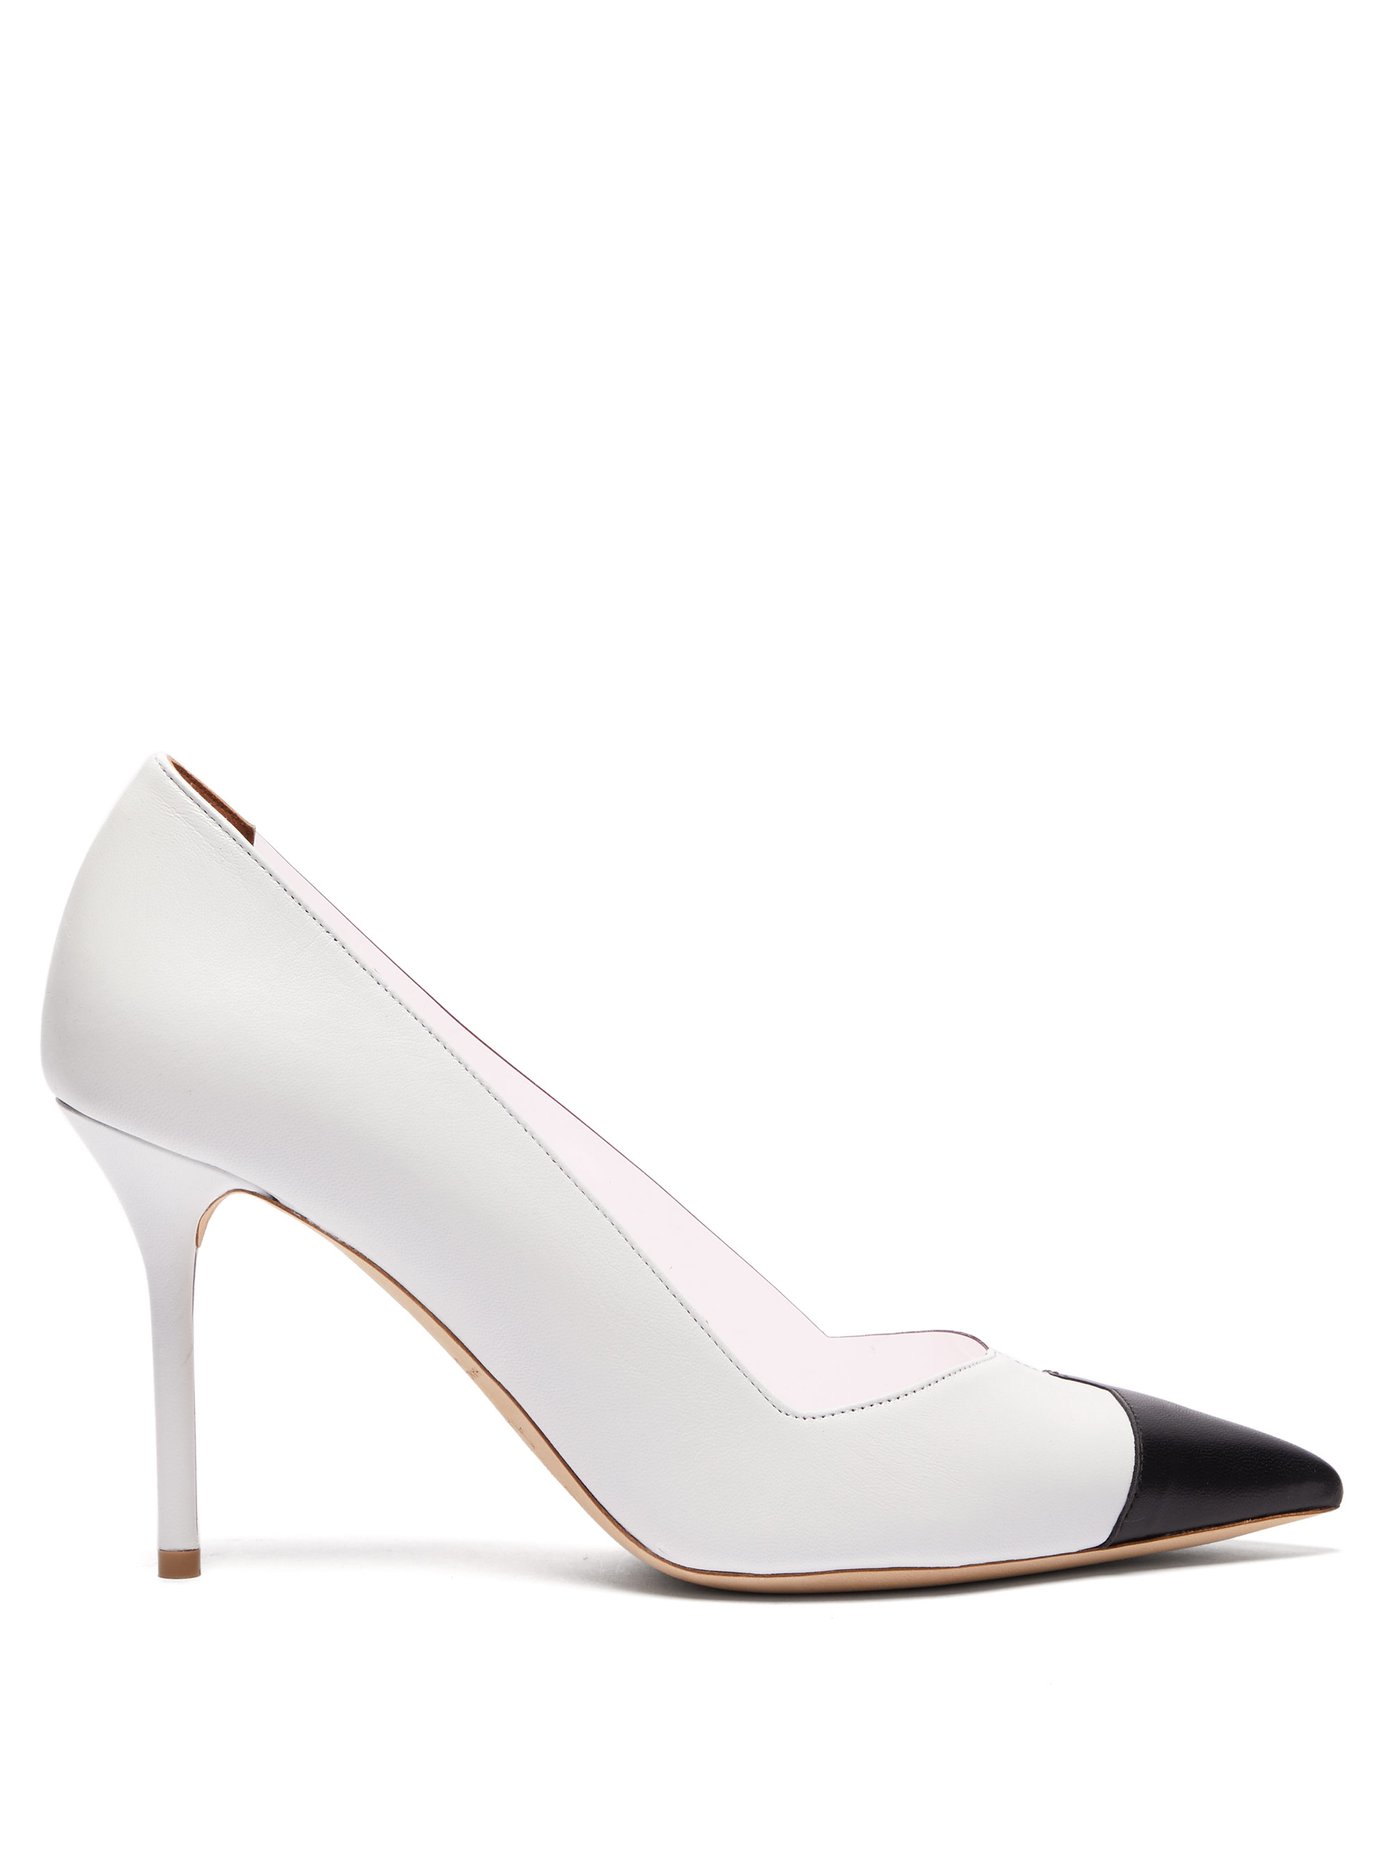 white perspex court heels